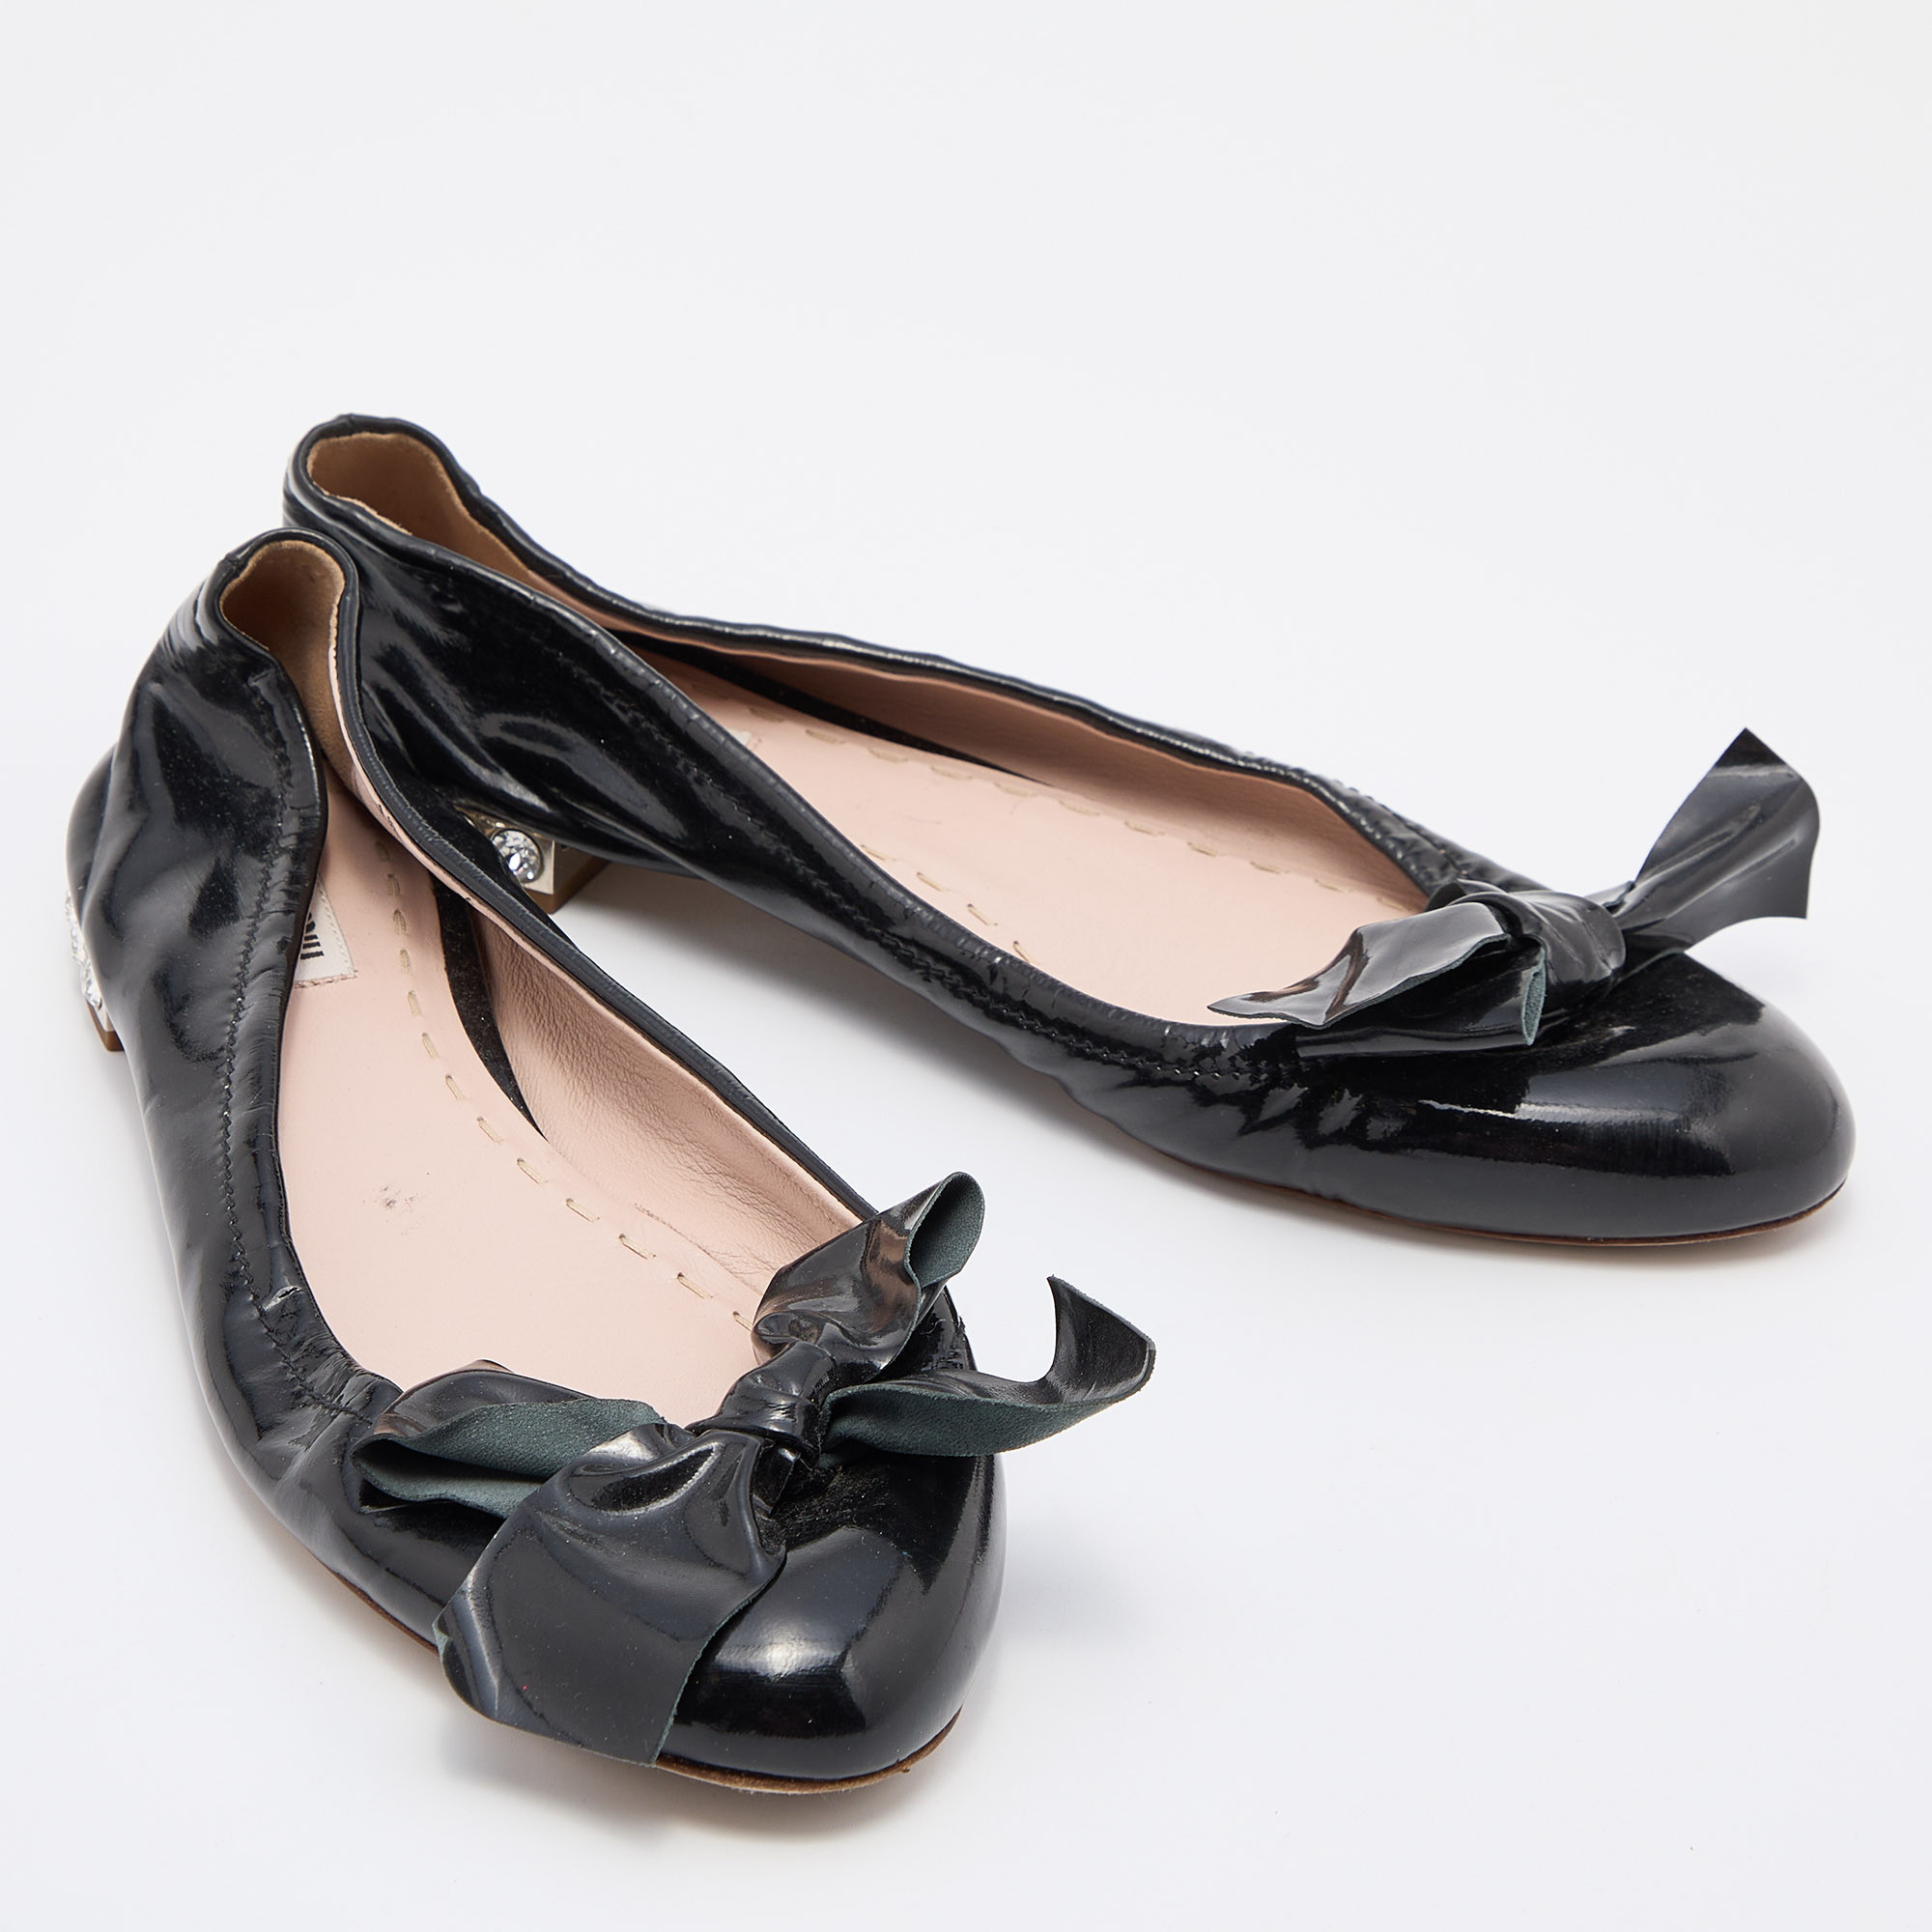 Miu Miu Black Patent Leather Crystal Embellished Bow Ballet Flats Size 38.5